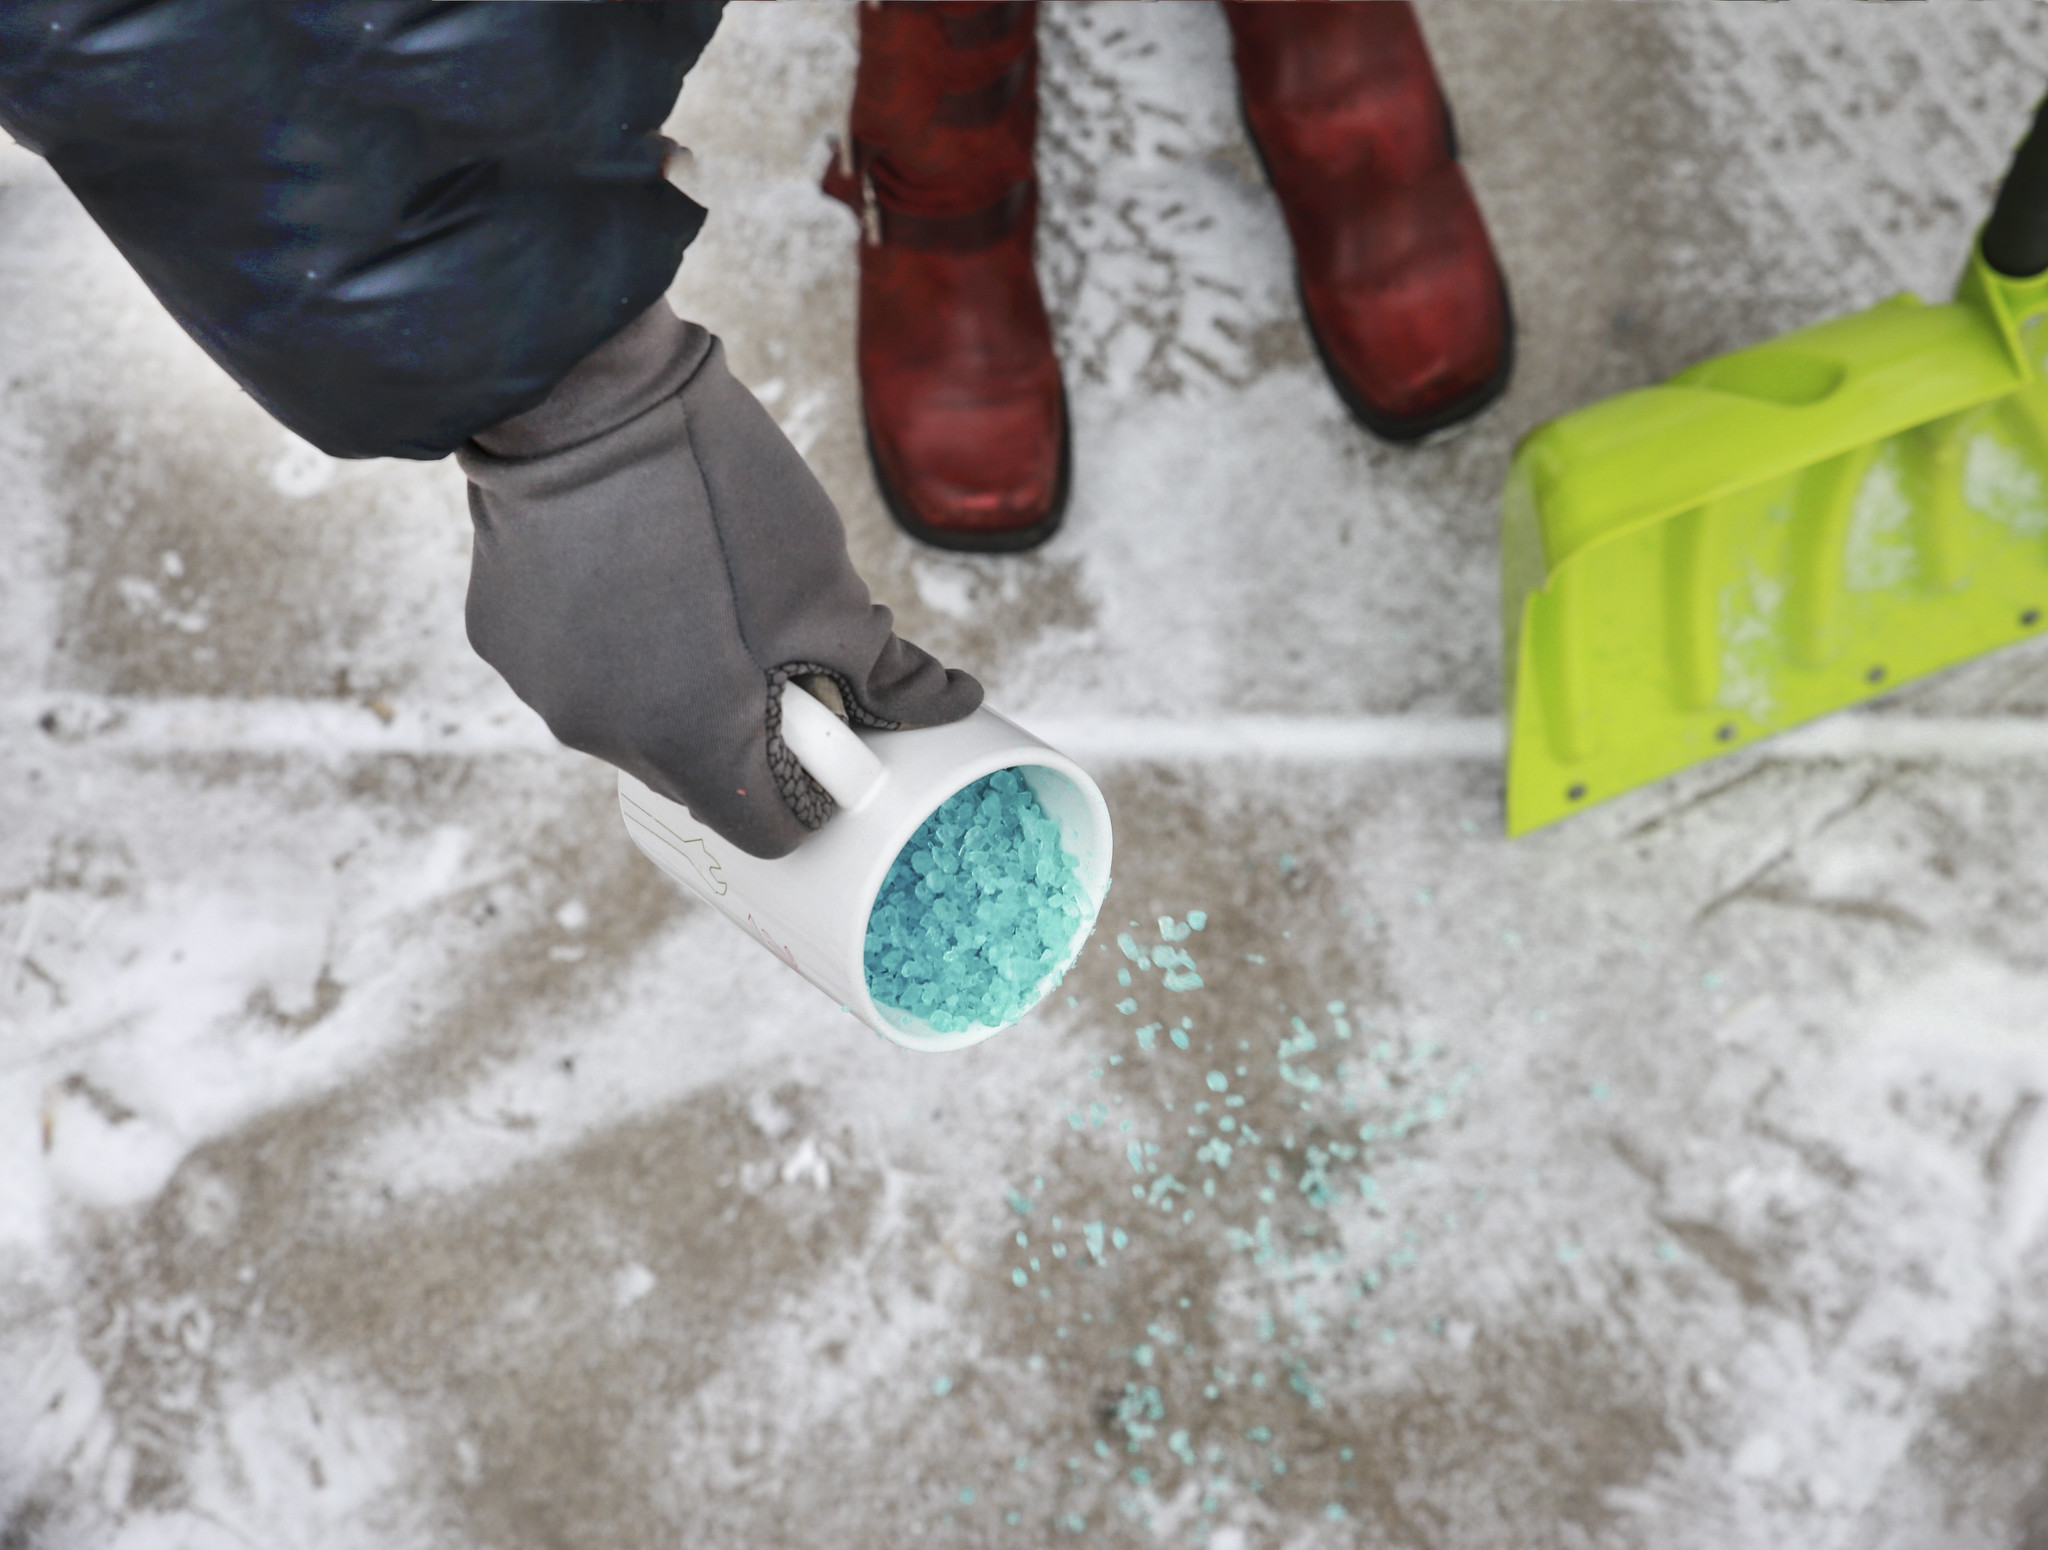 Person applies salt to snowy sidewalk 